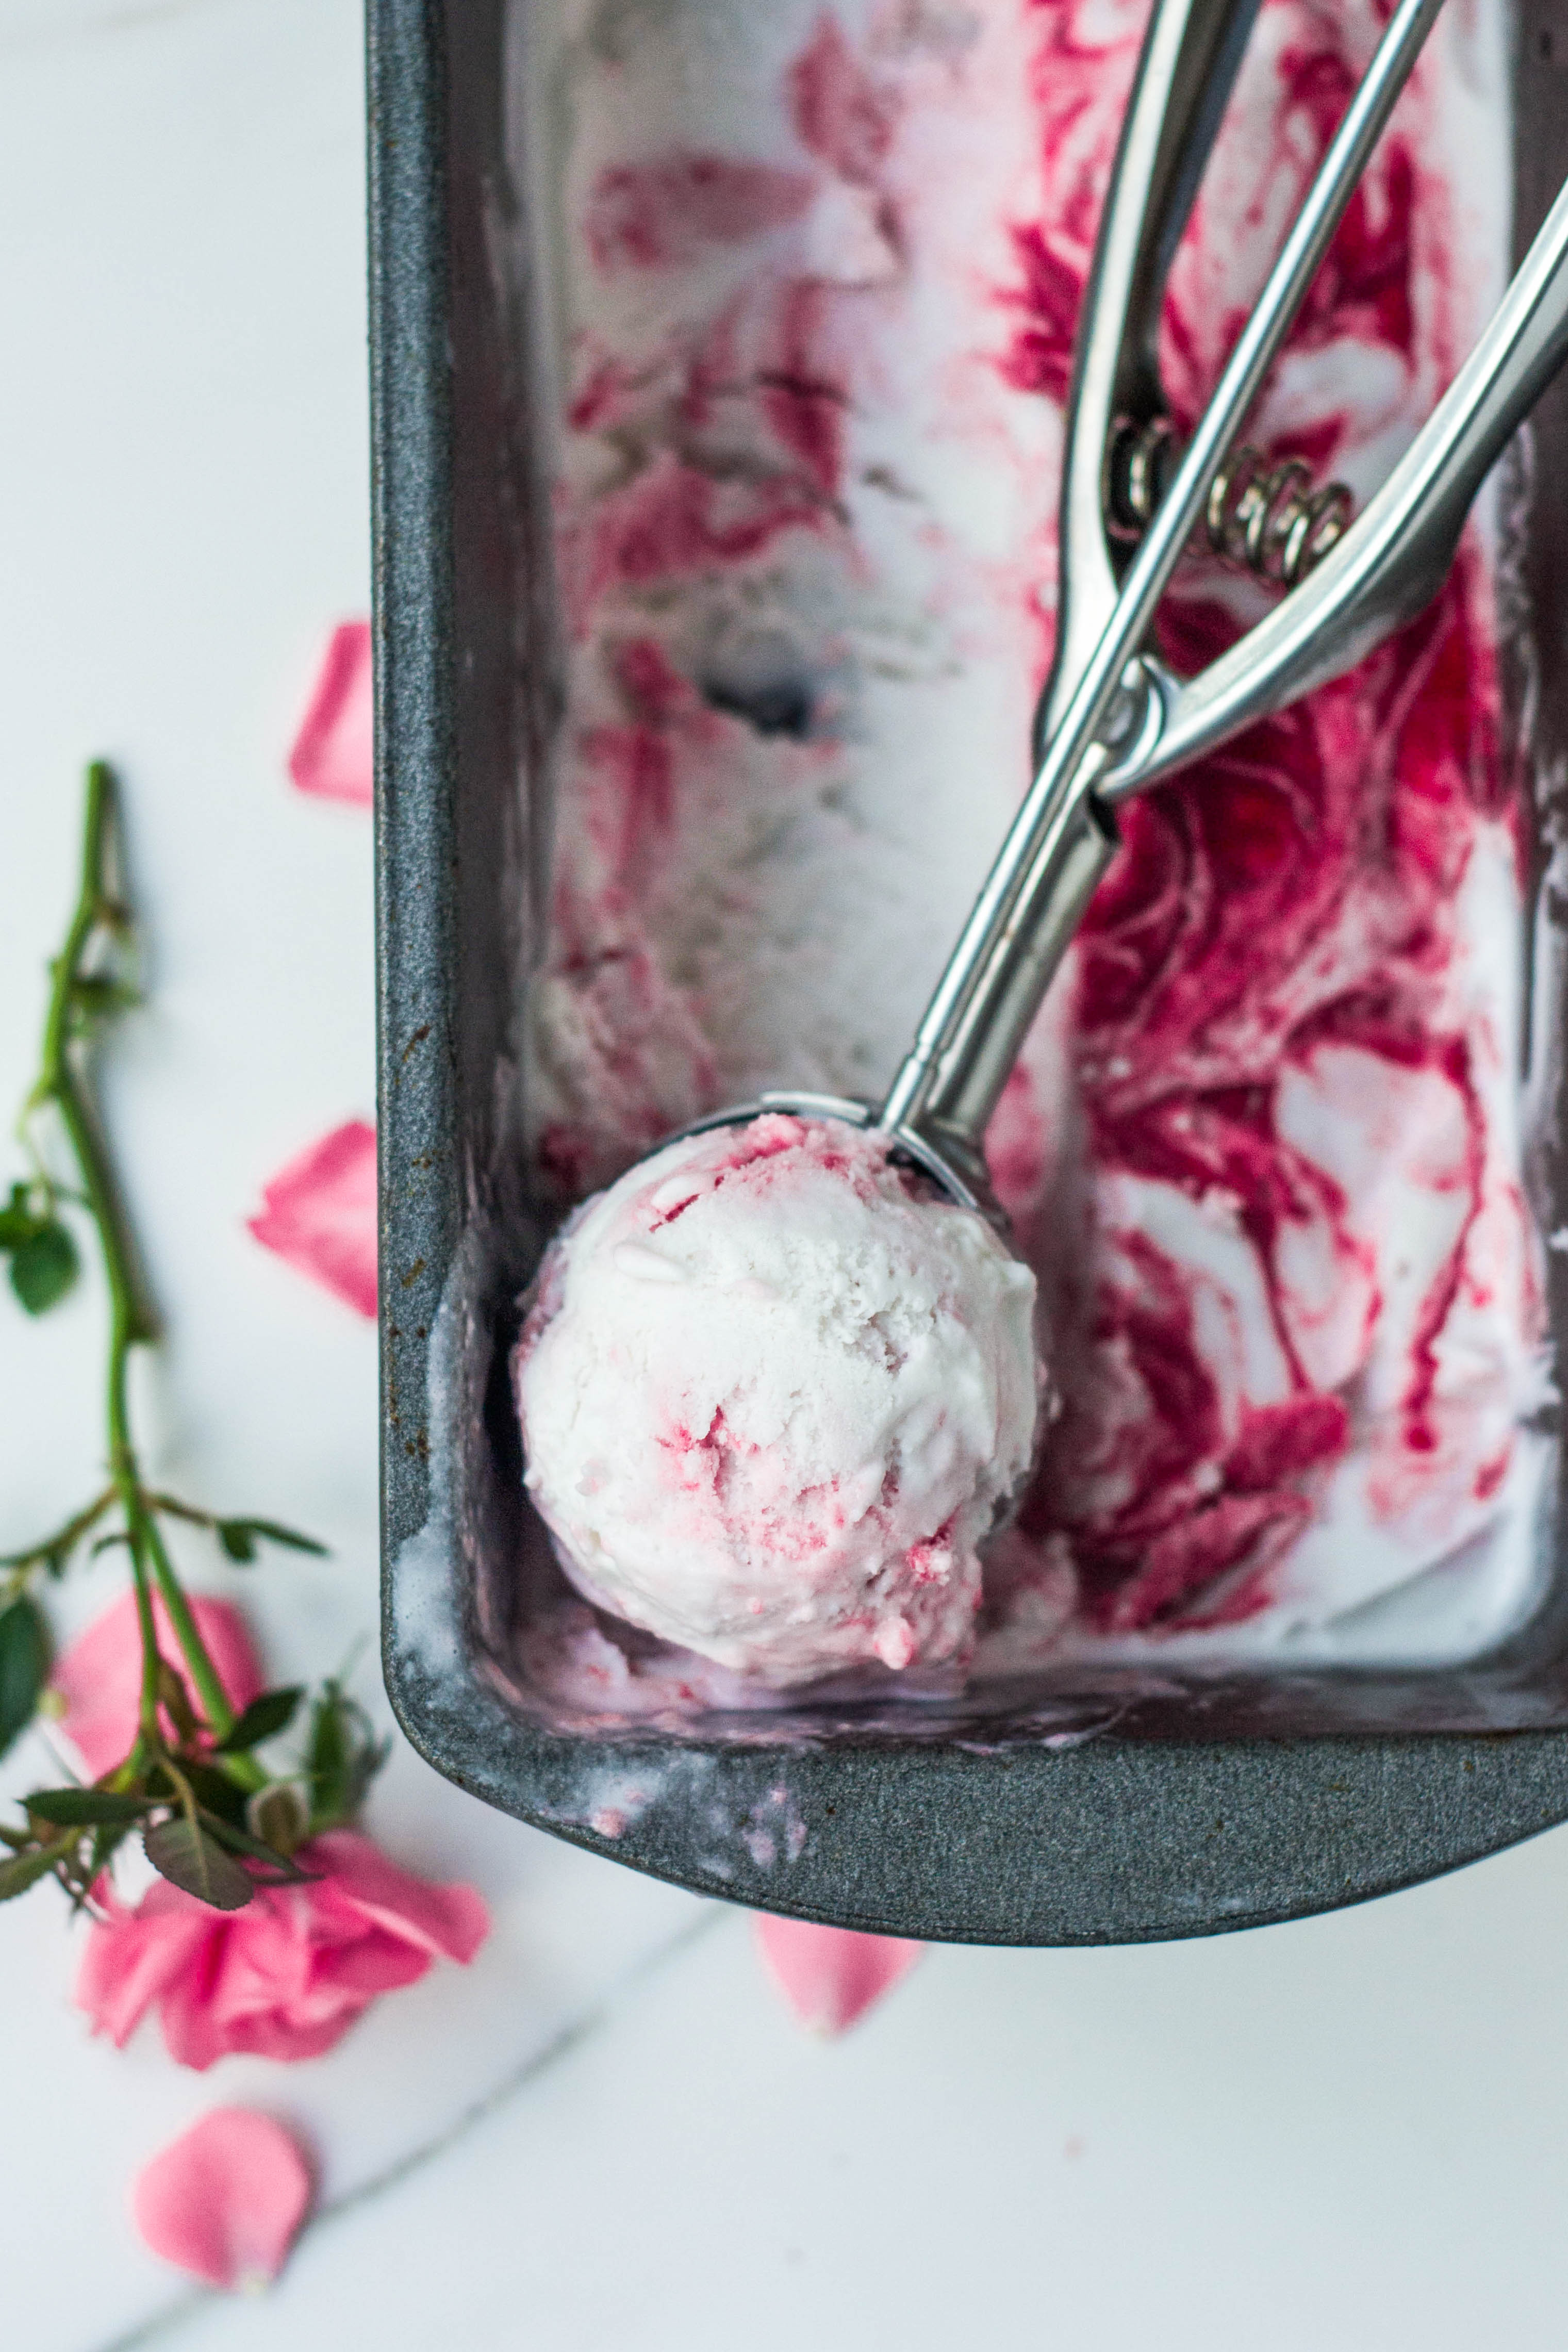 Vegan Rose Raspberry Ripple Ice Cream